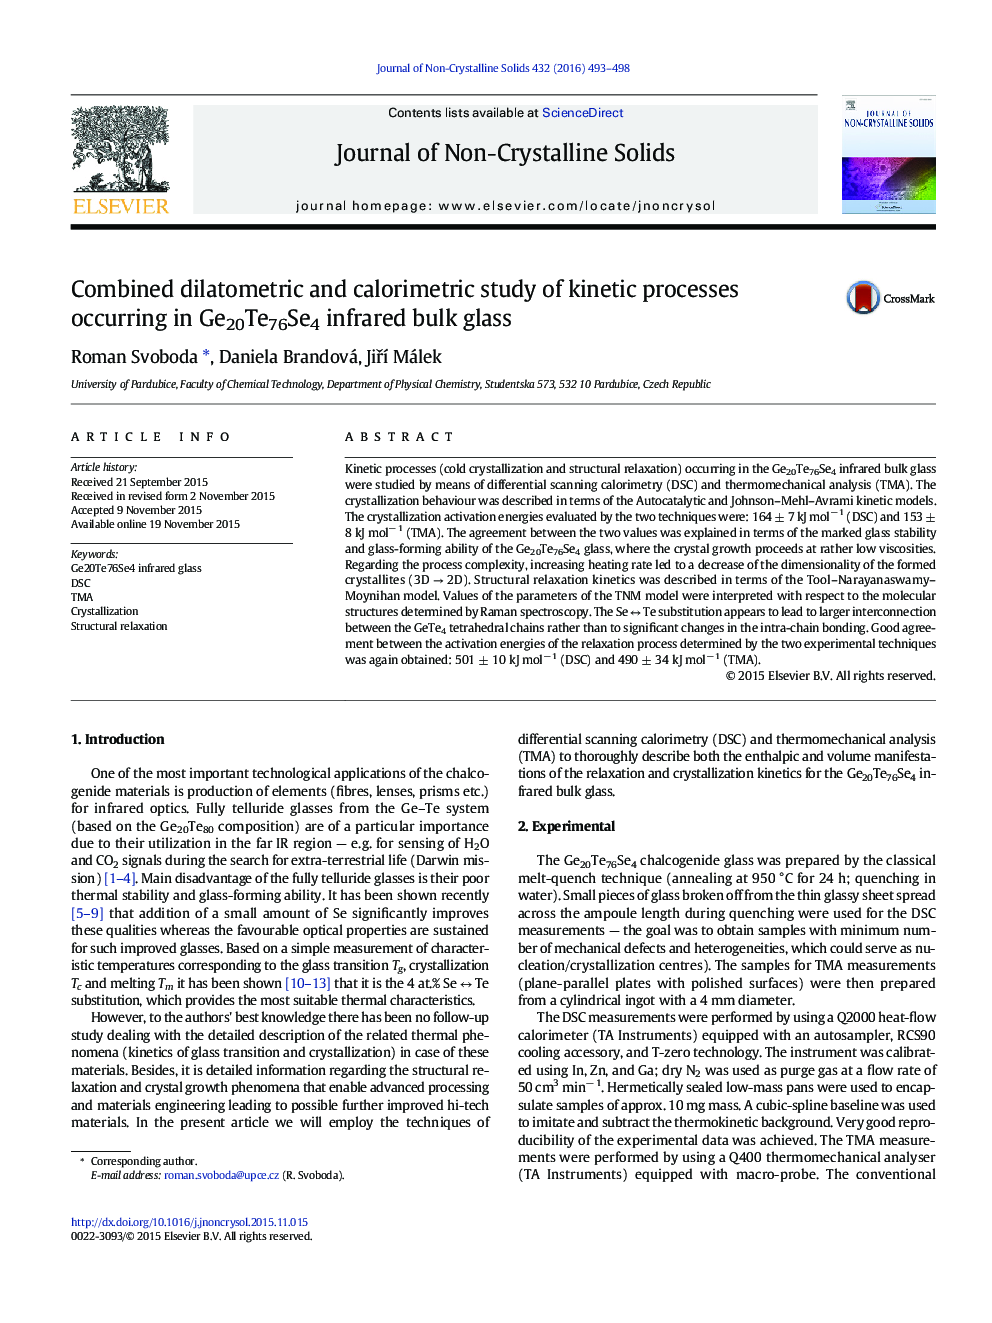 Combined dilatometric and calorimetric study of kinetic processes occurring in Ge20Te76Se4 infrared bulk glass